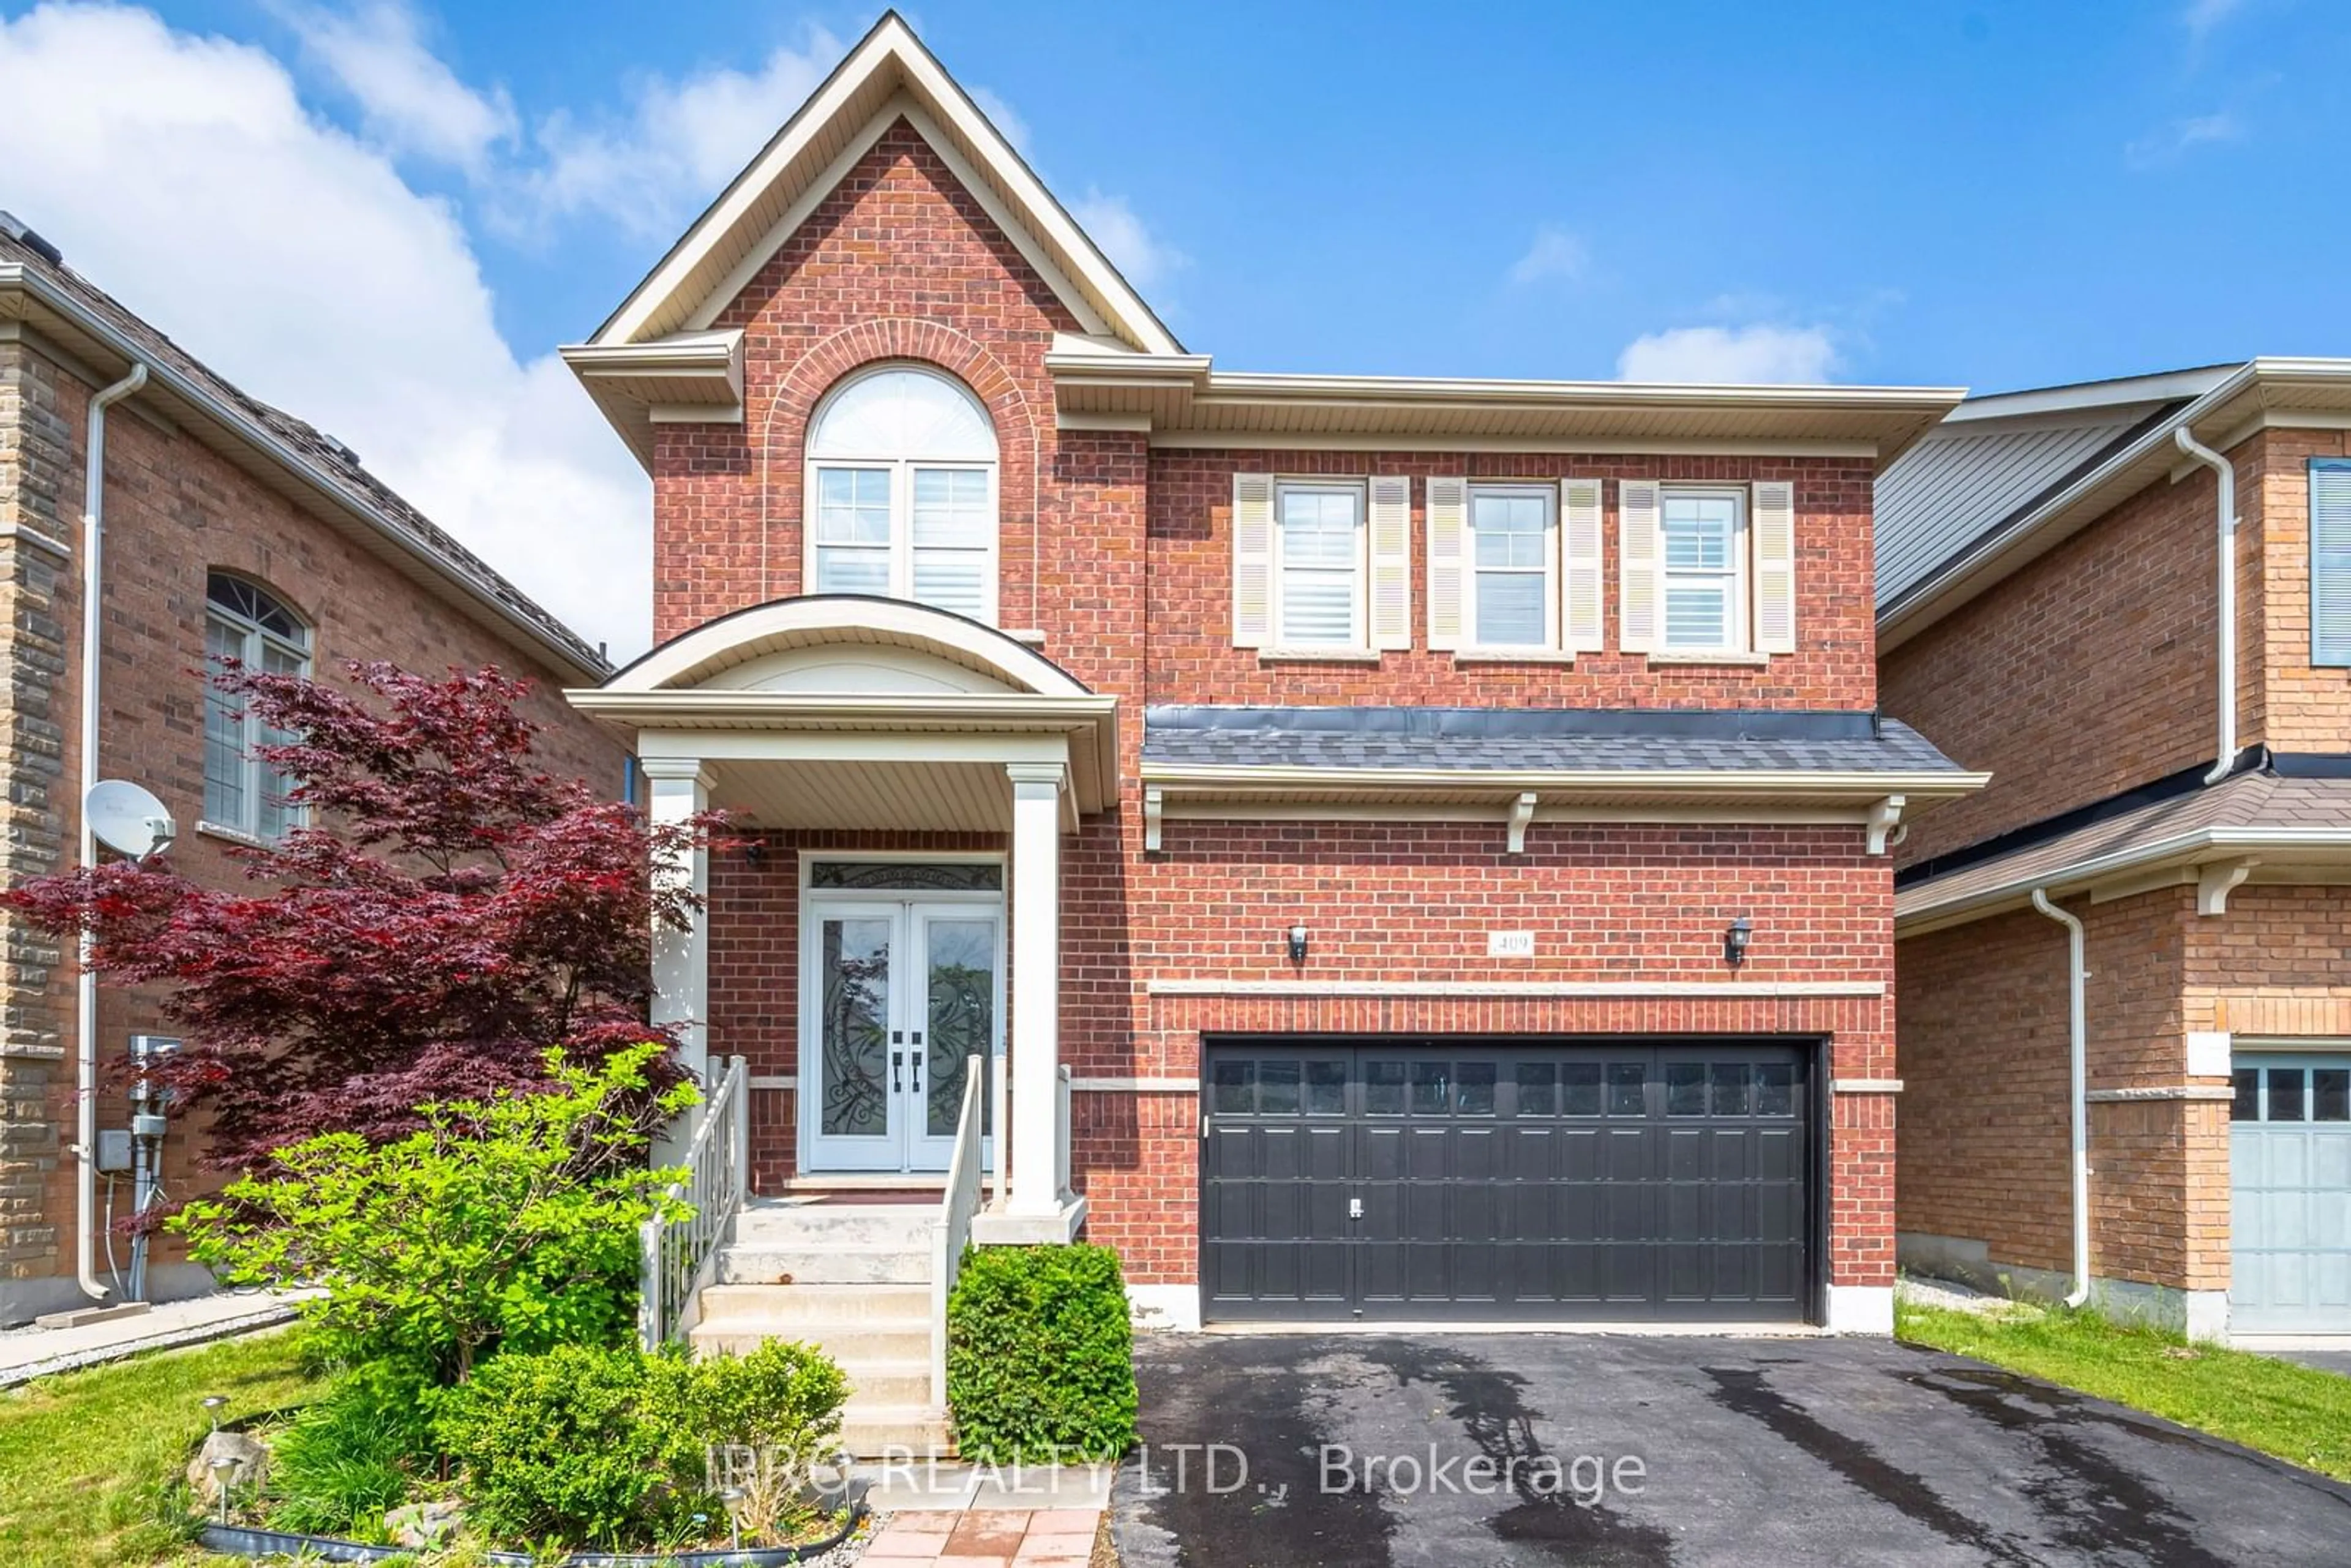 Home with brick exterior material for 409 Scott Blvd, Milton Ontario L9T 0T1